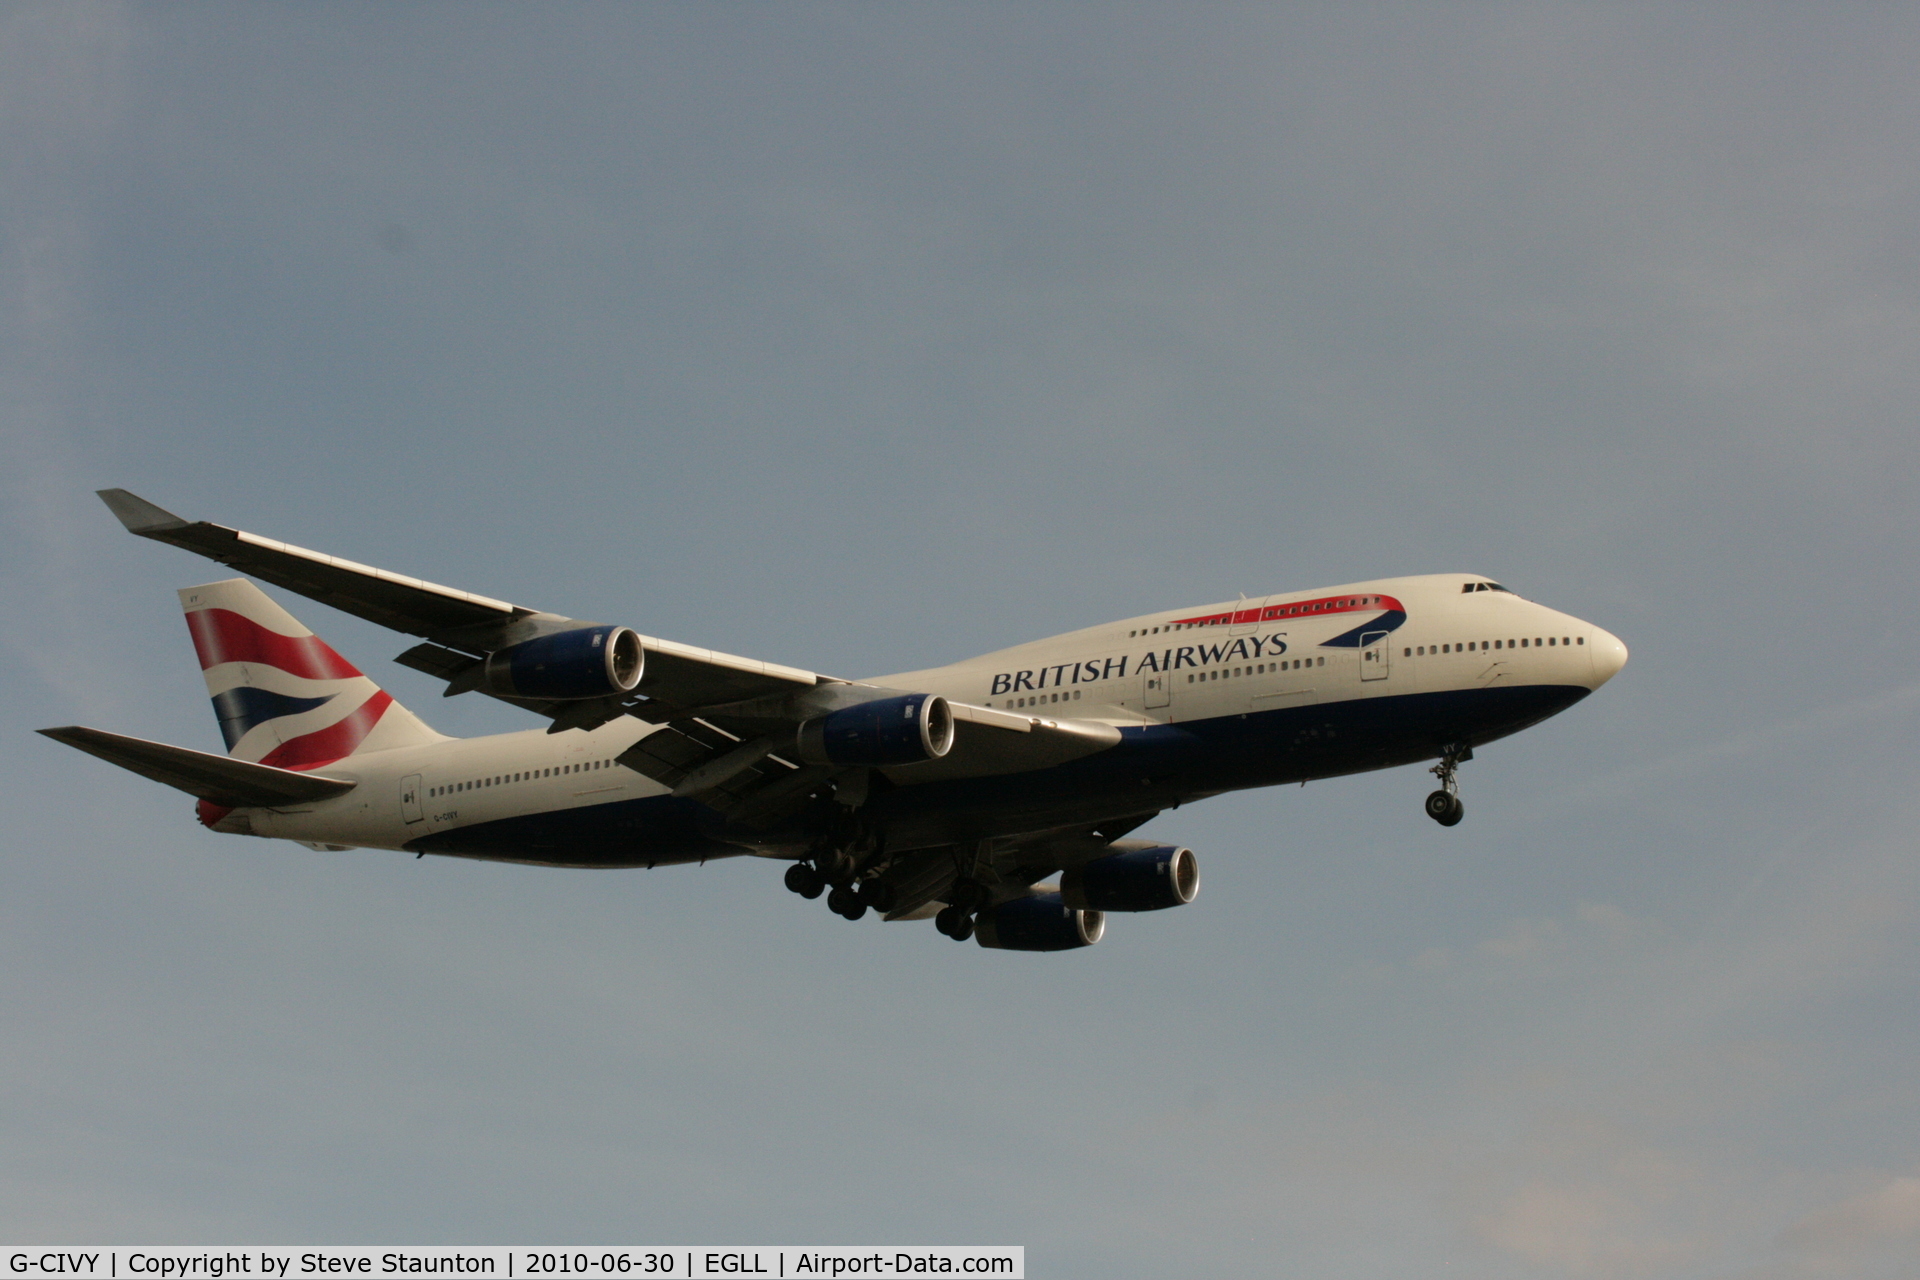 G-CIVY, 1998 Boeing 747-436 C/N 28853, Taken at Heathrow Airport, June 2010